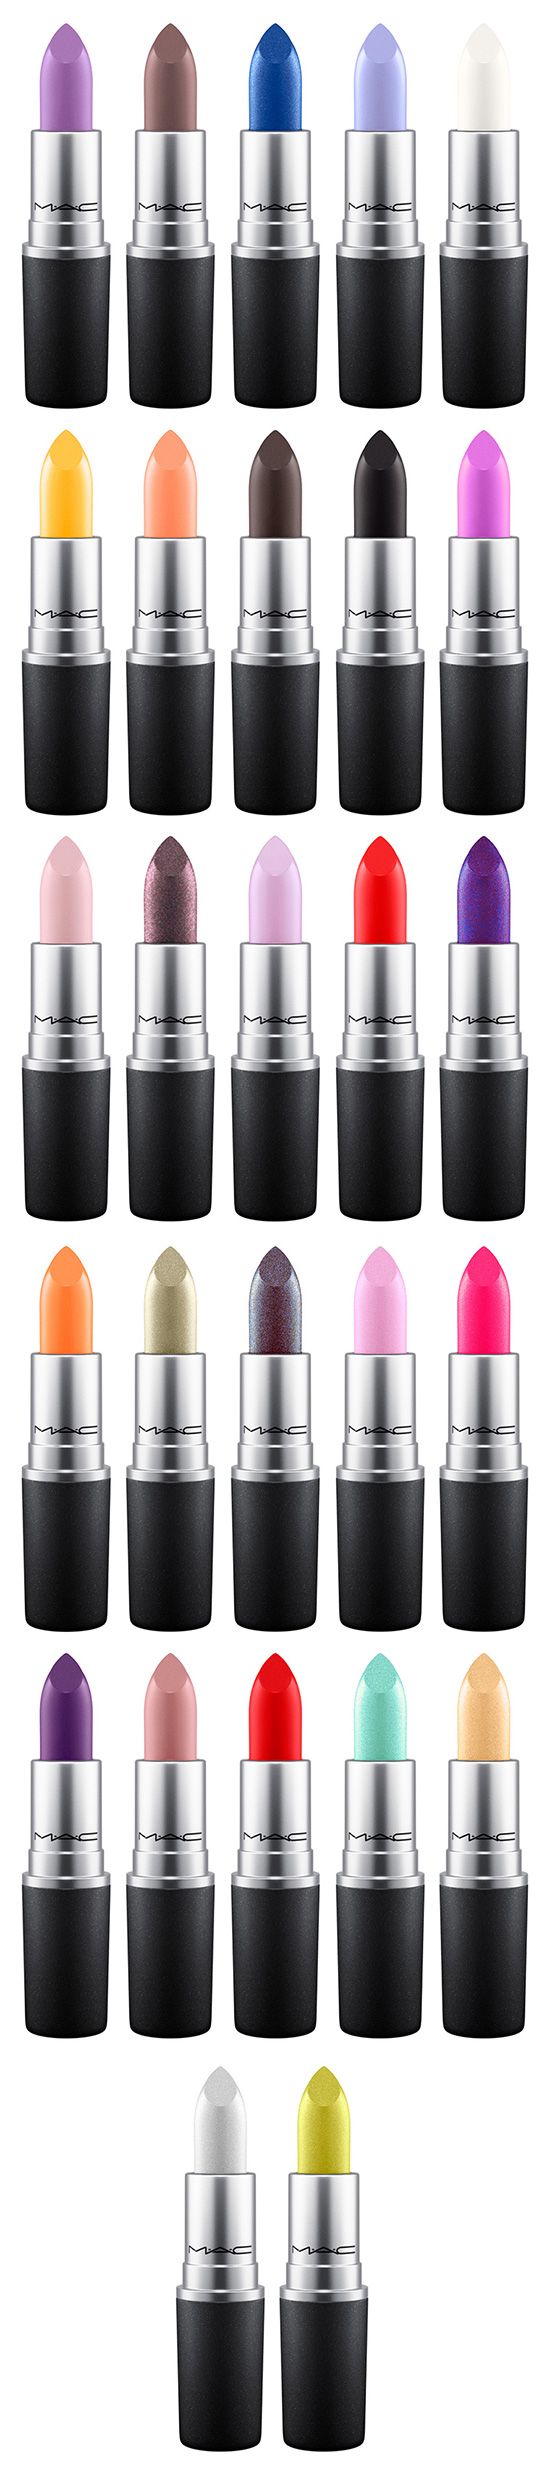 mac-bangin-brilliant-lipsticks-summer-2016